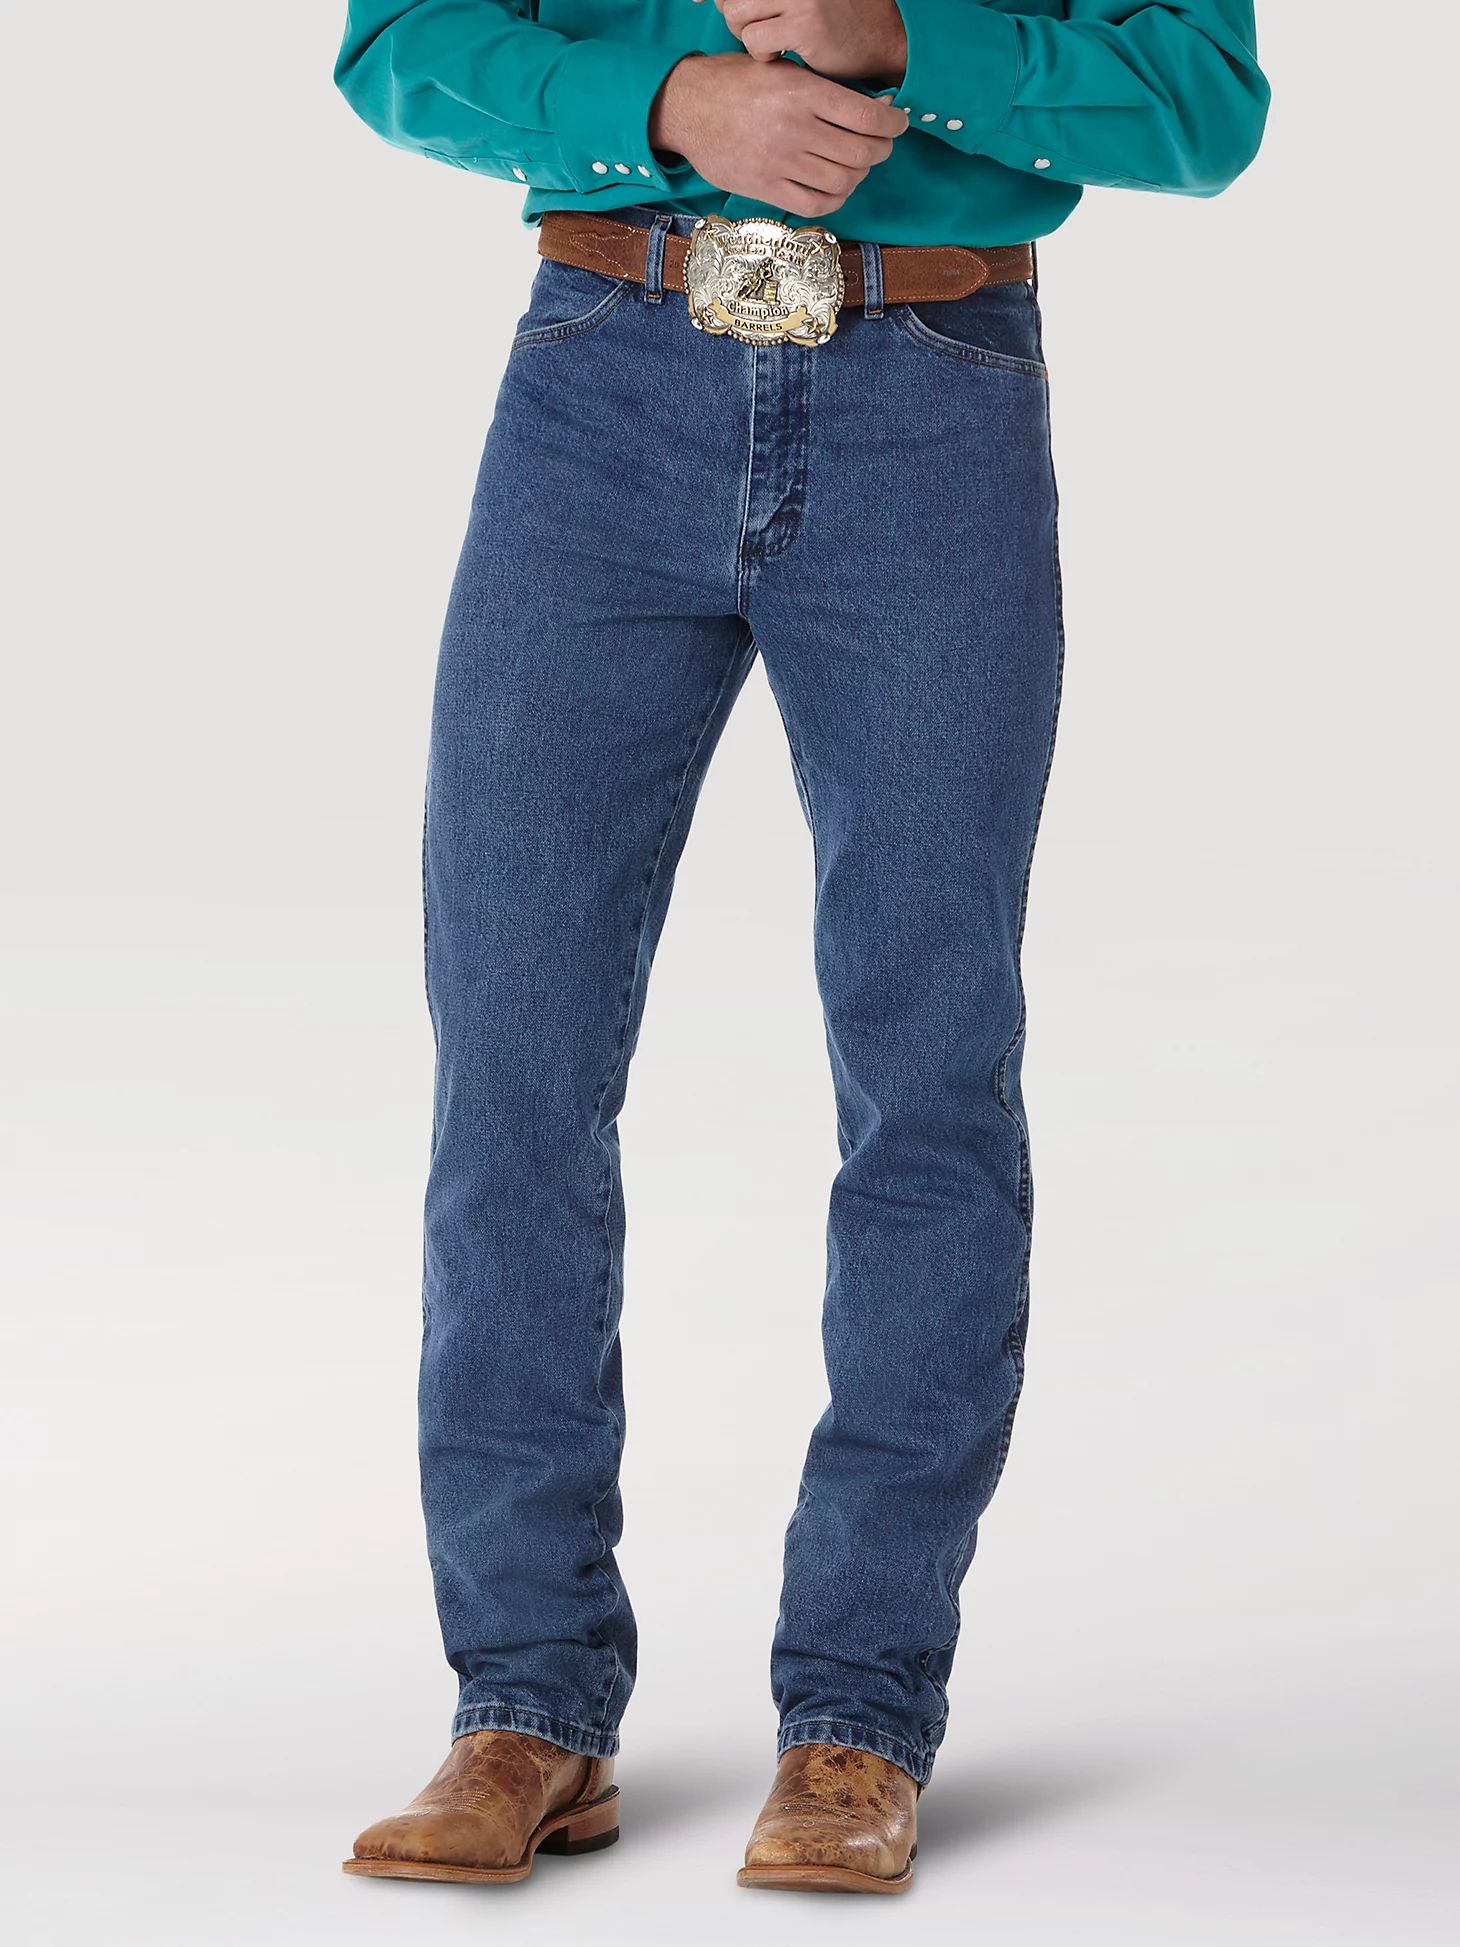 Wrangler® Cowboy Cut® Slim Fit Jean in Stonewashed | Wrangler